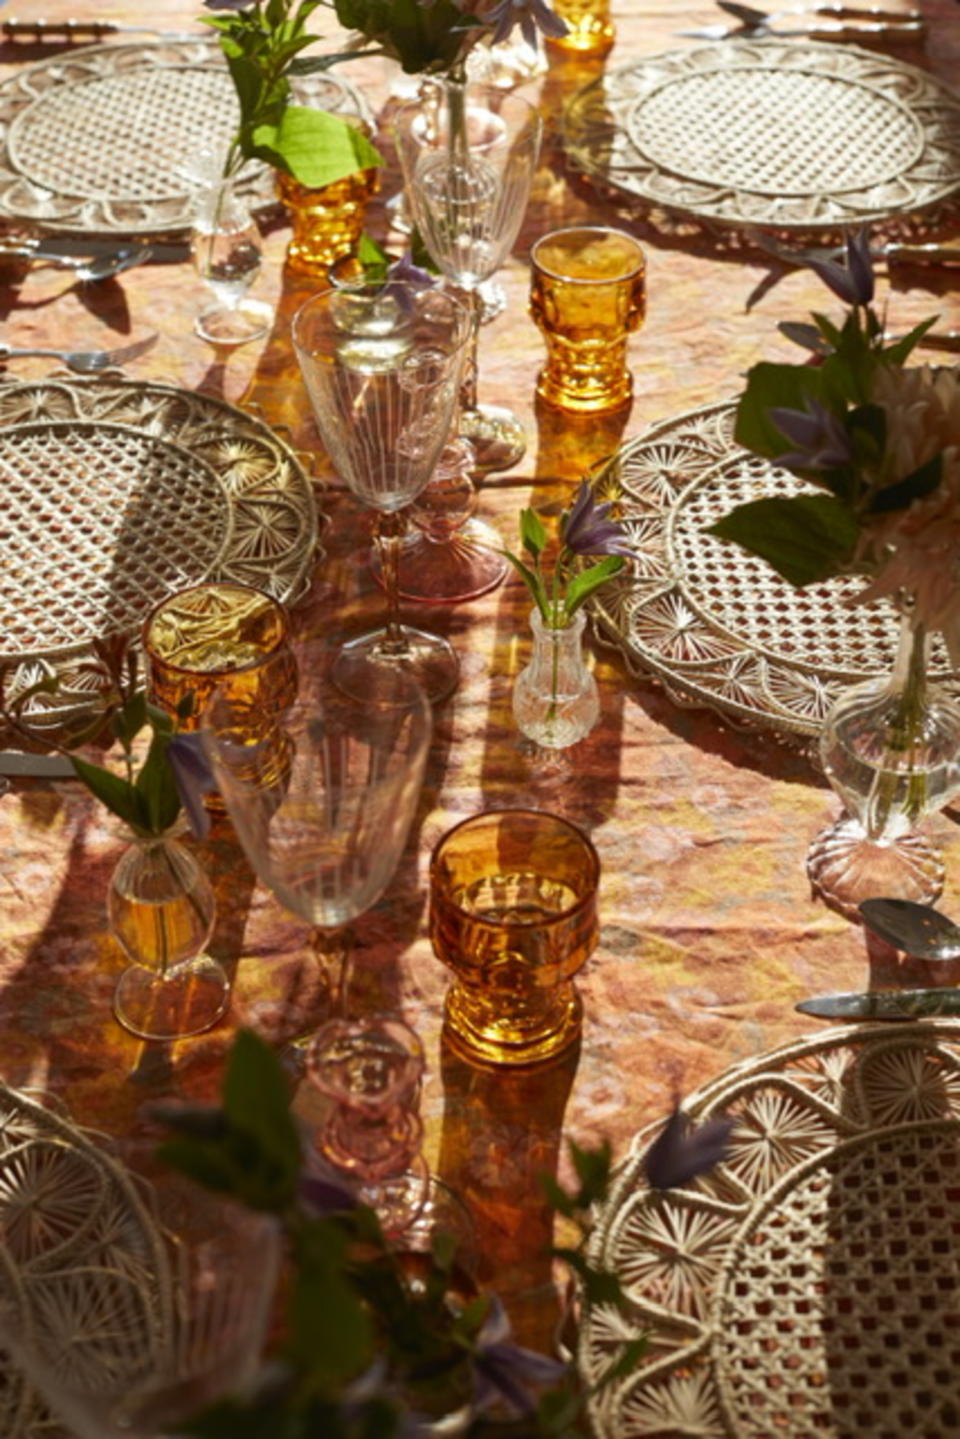 An orange tablescape with glassware